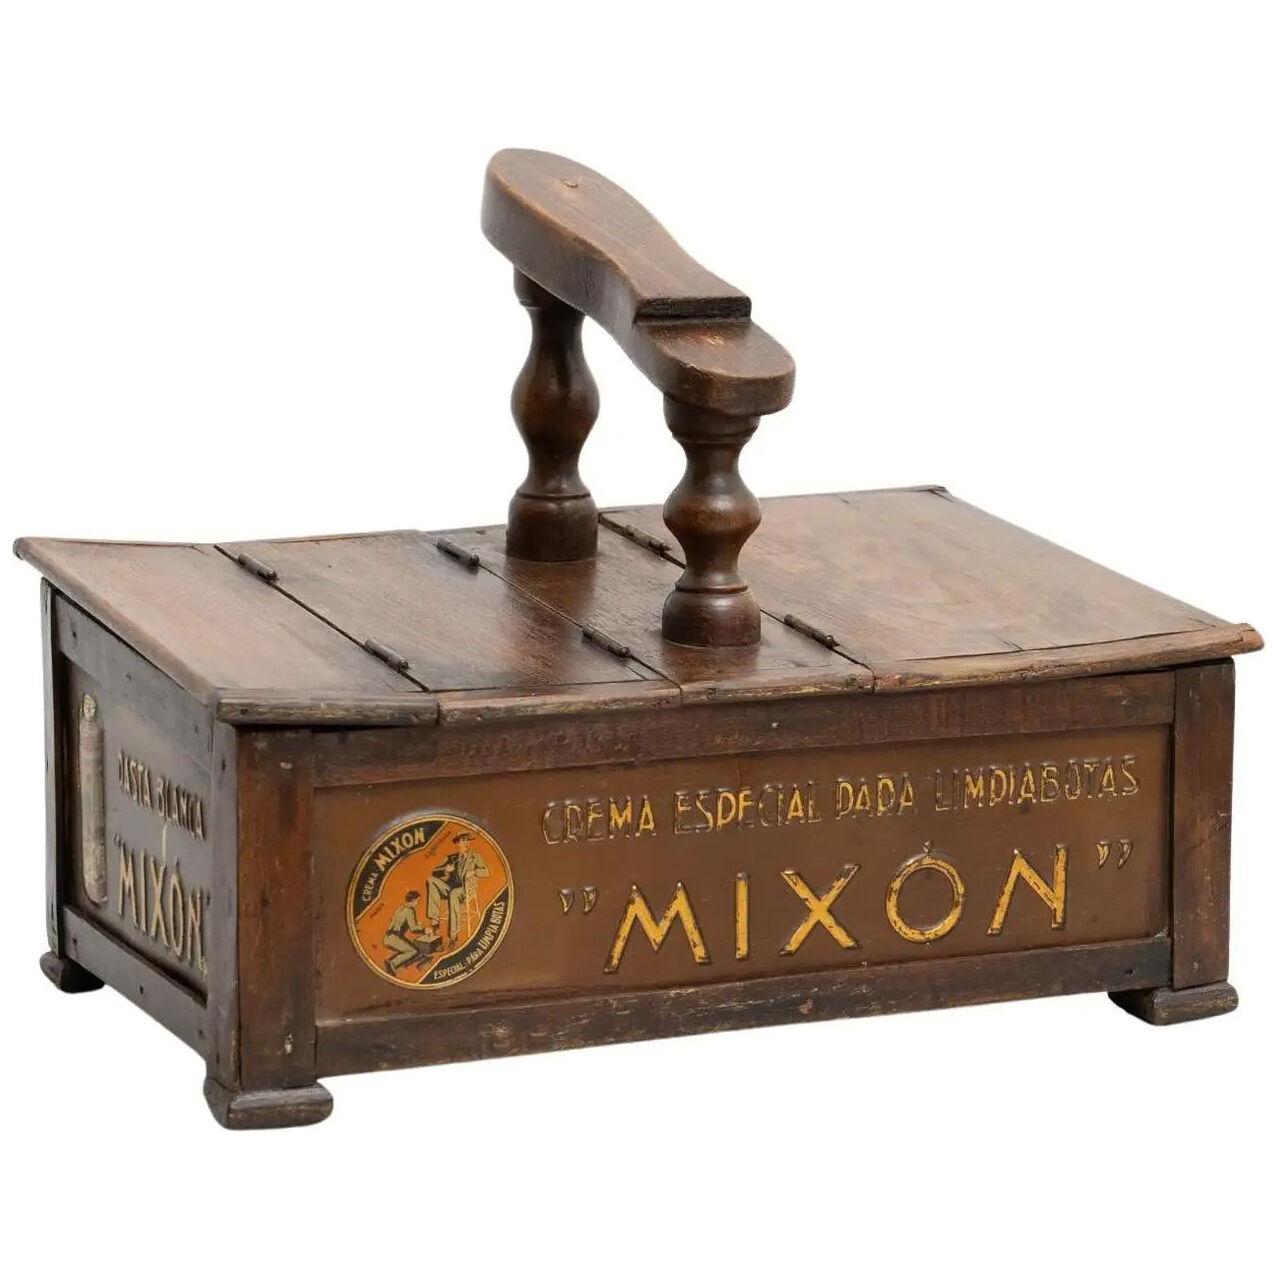 Antique 'Mixon' Cream Spanish Shoe Shiner Box, circa 1930